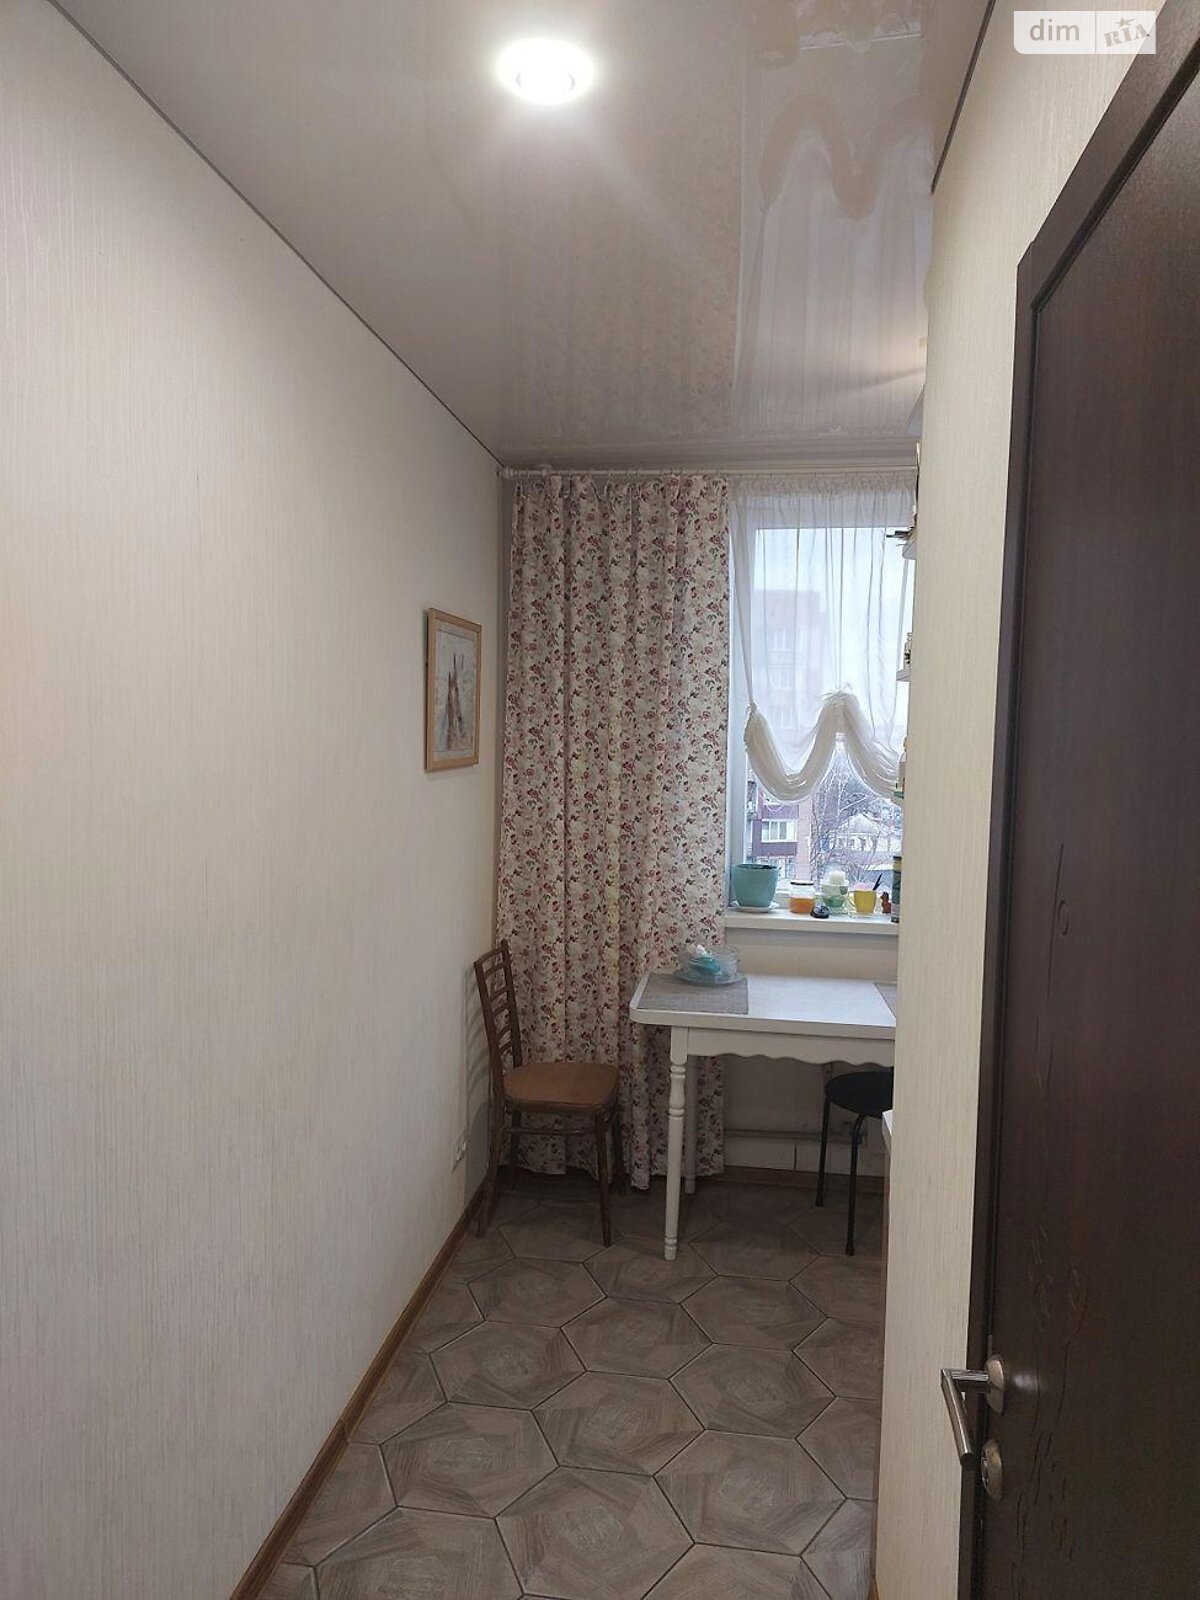 Продажа однокомнатной квартиры в Харькове, на ул. Болбочана Петра 7, район Рубановка фото 1